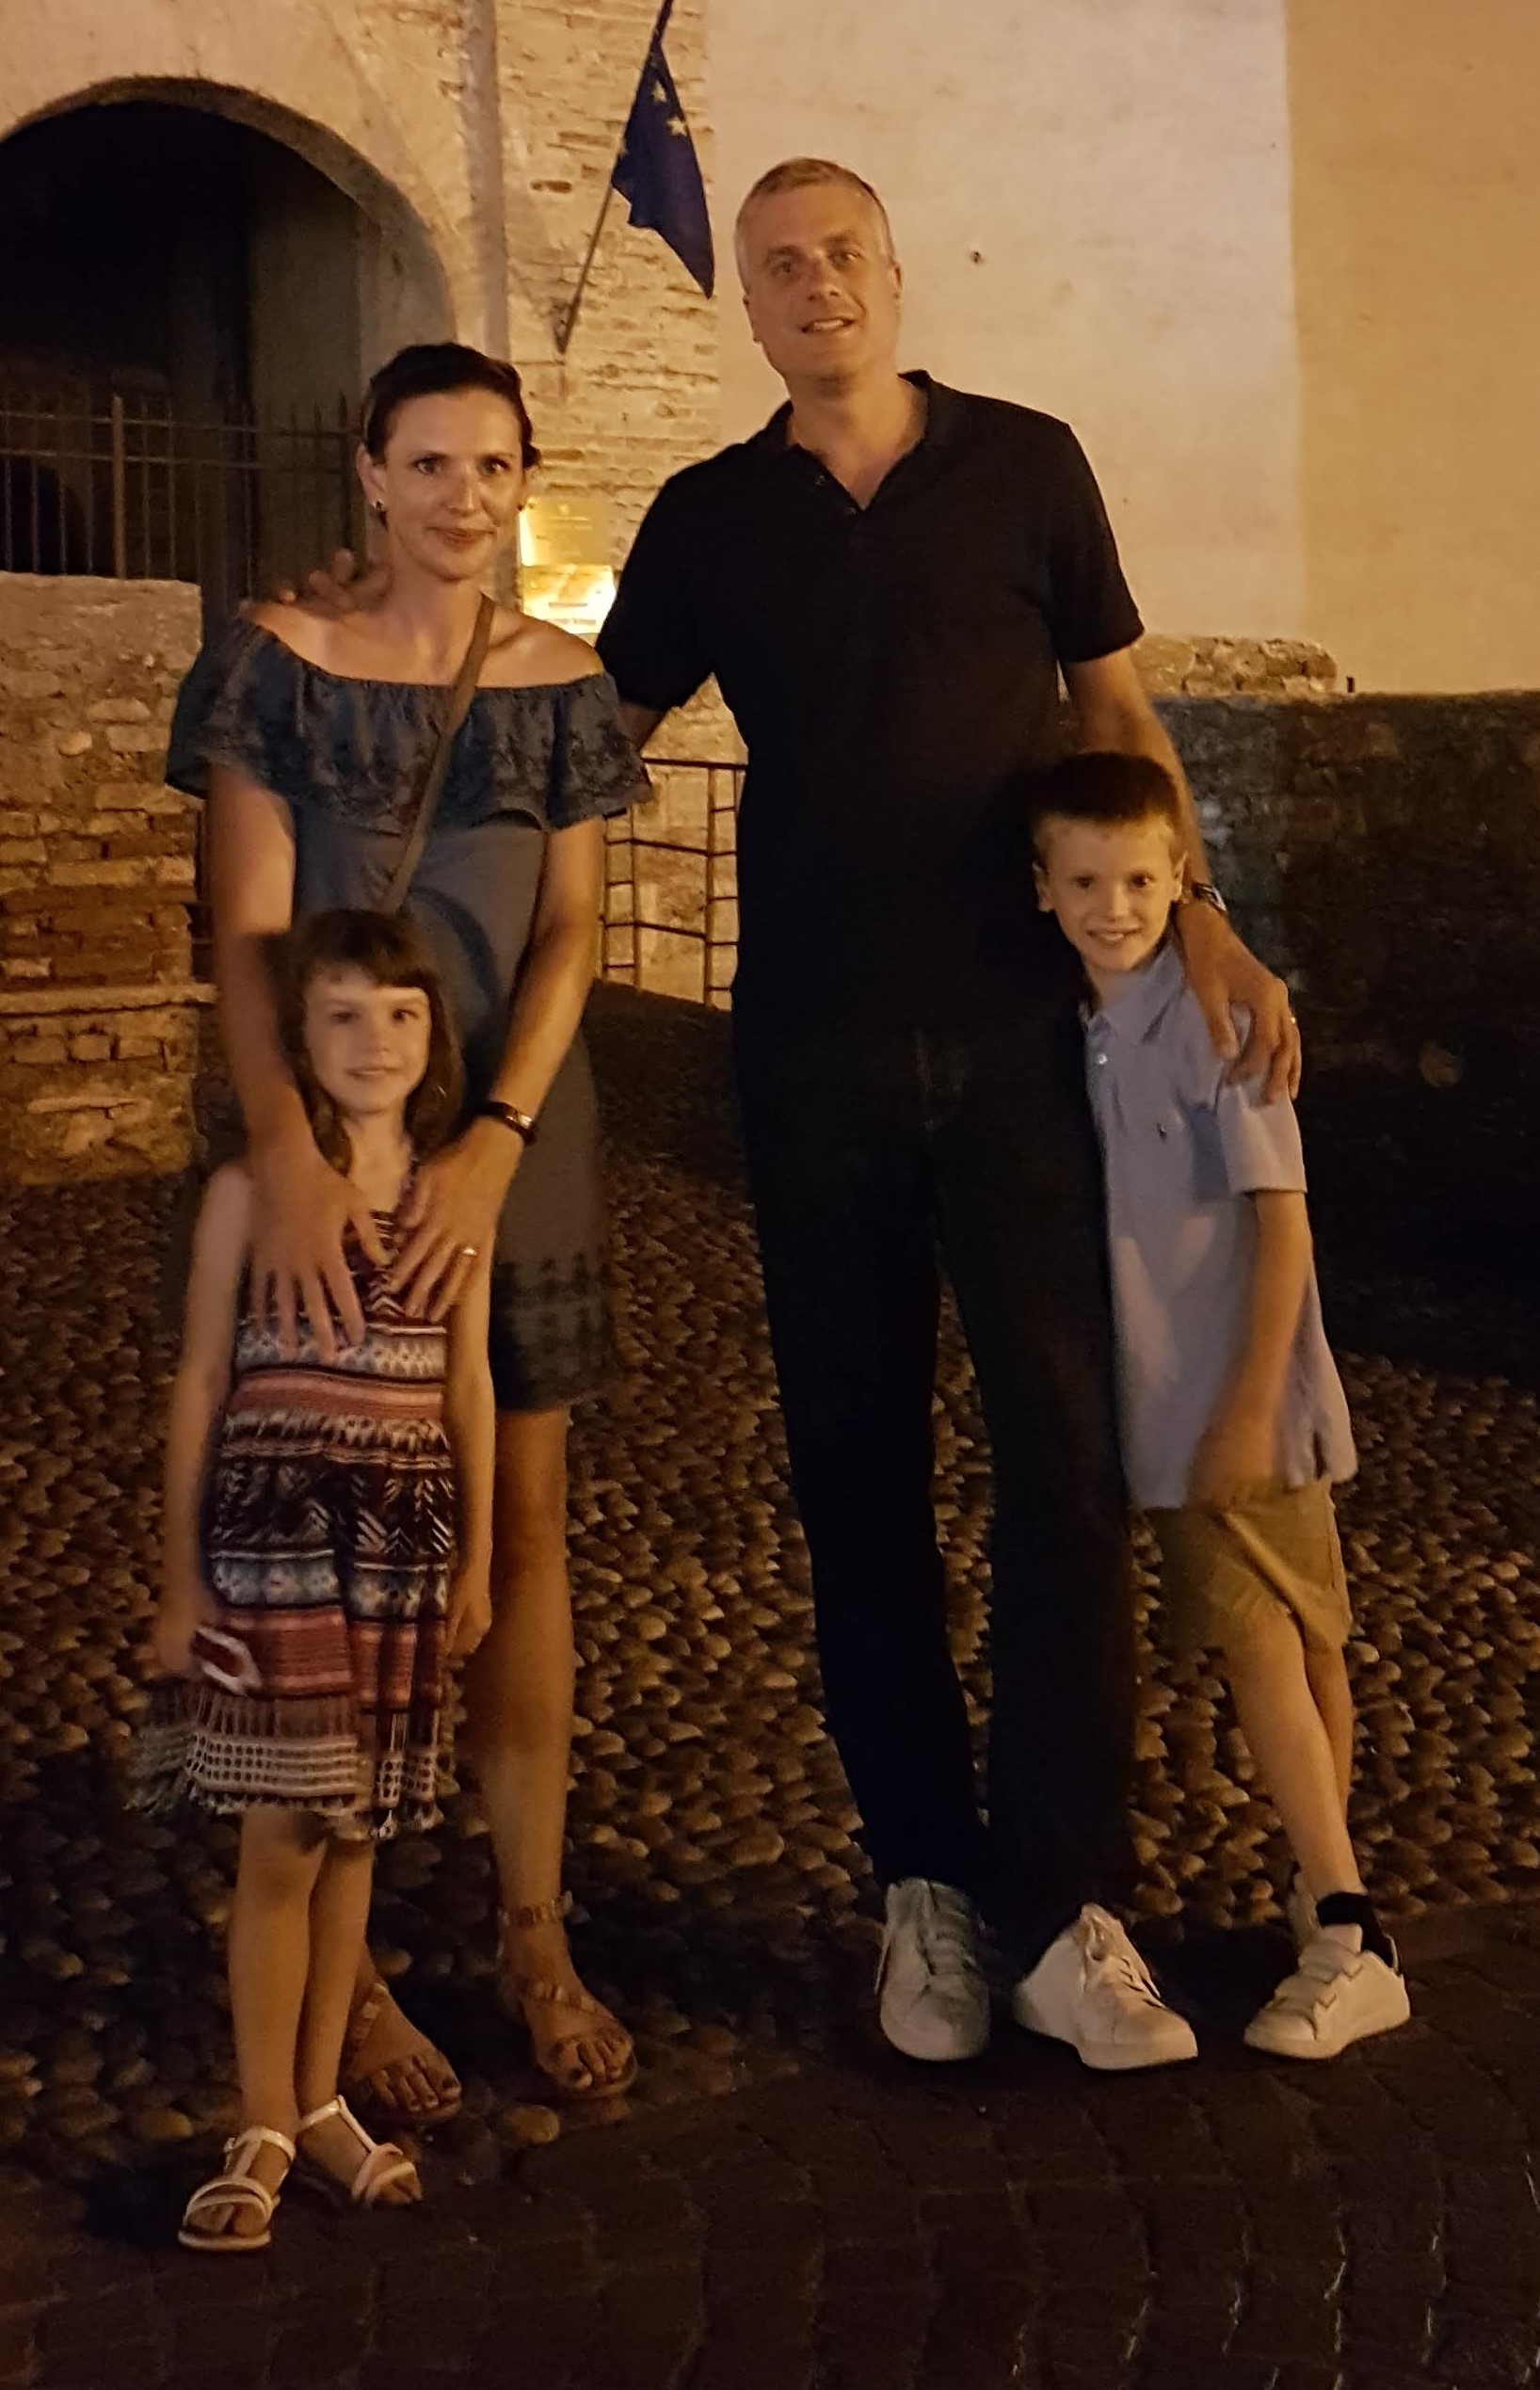 Family photo on holiday